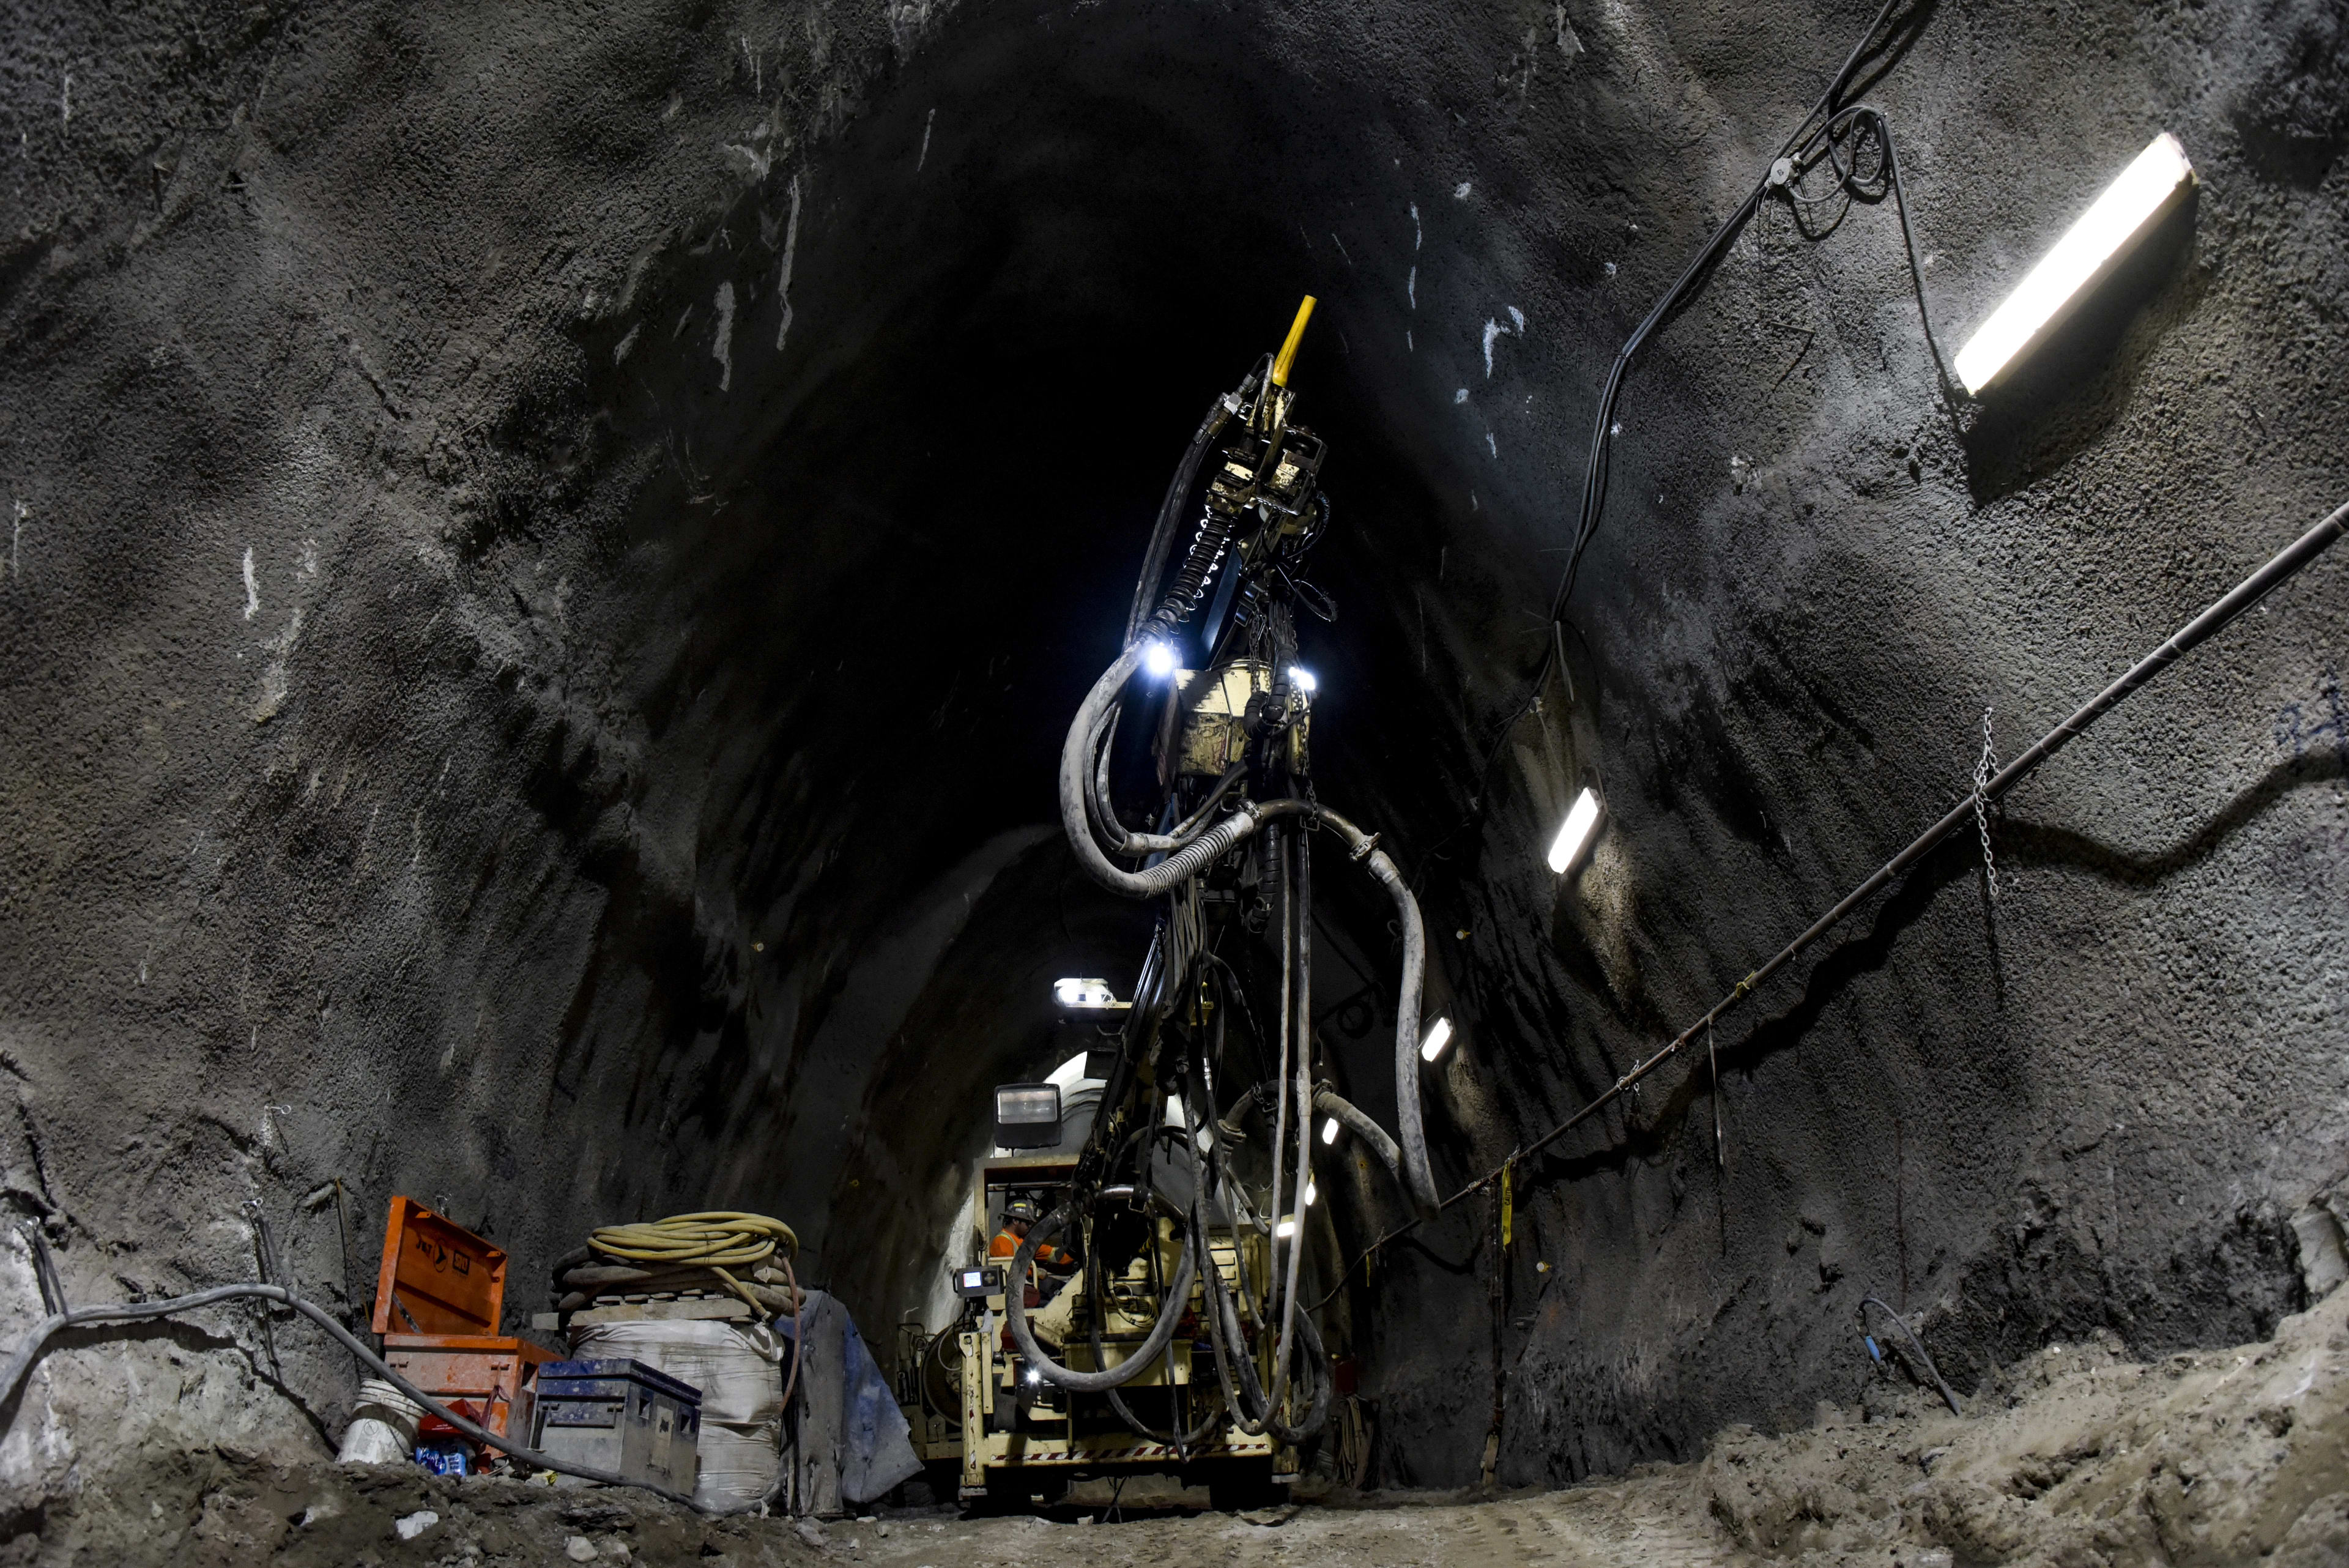 Heavy machinery continues to excavate caverns underground.